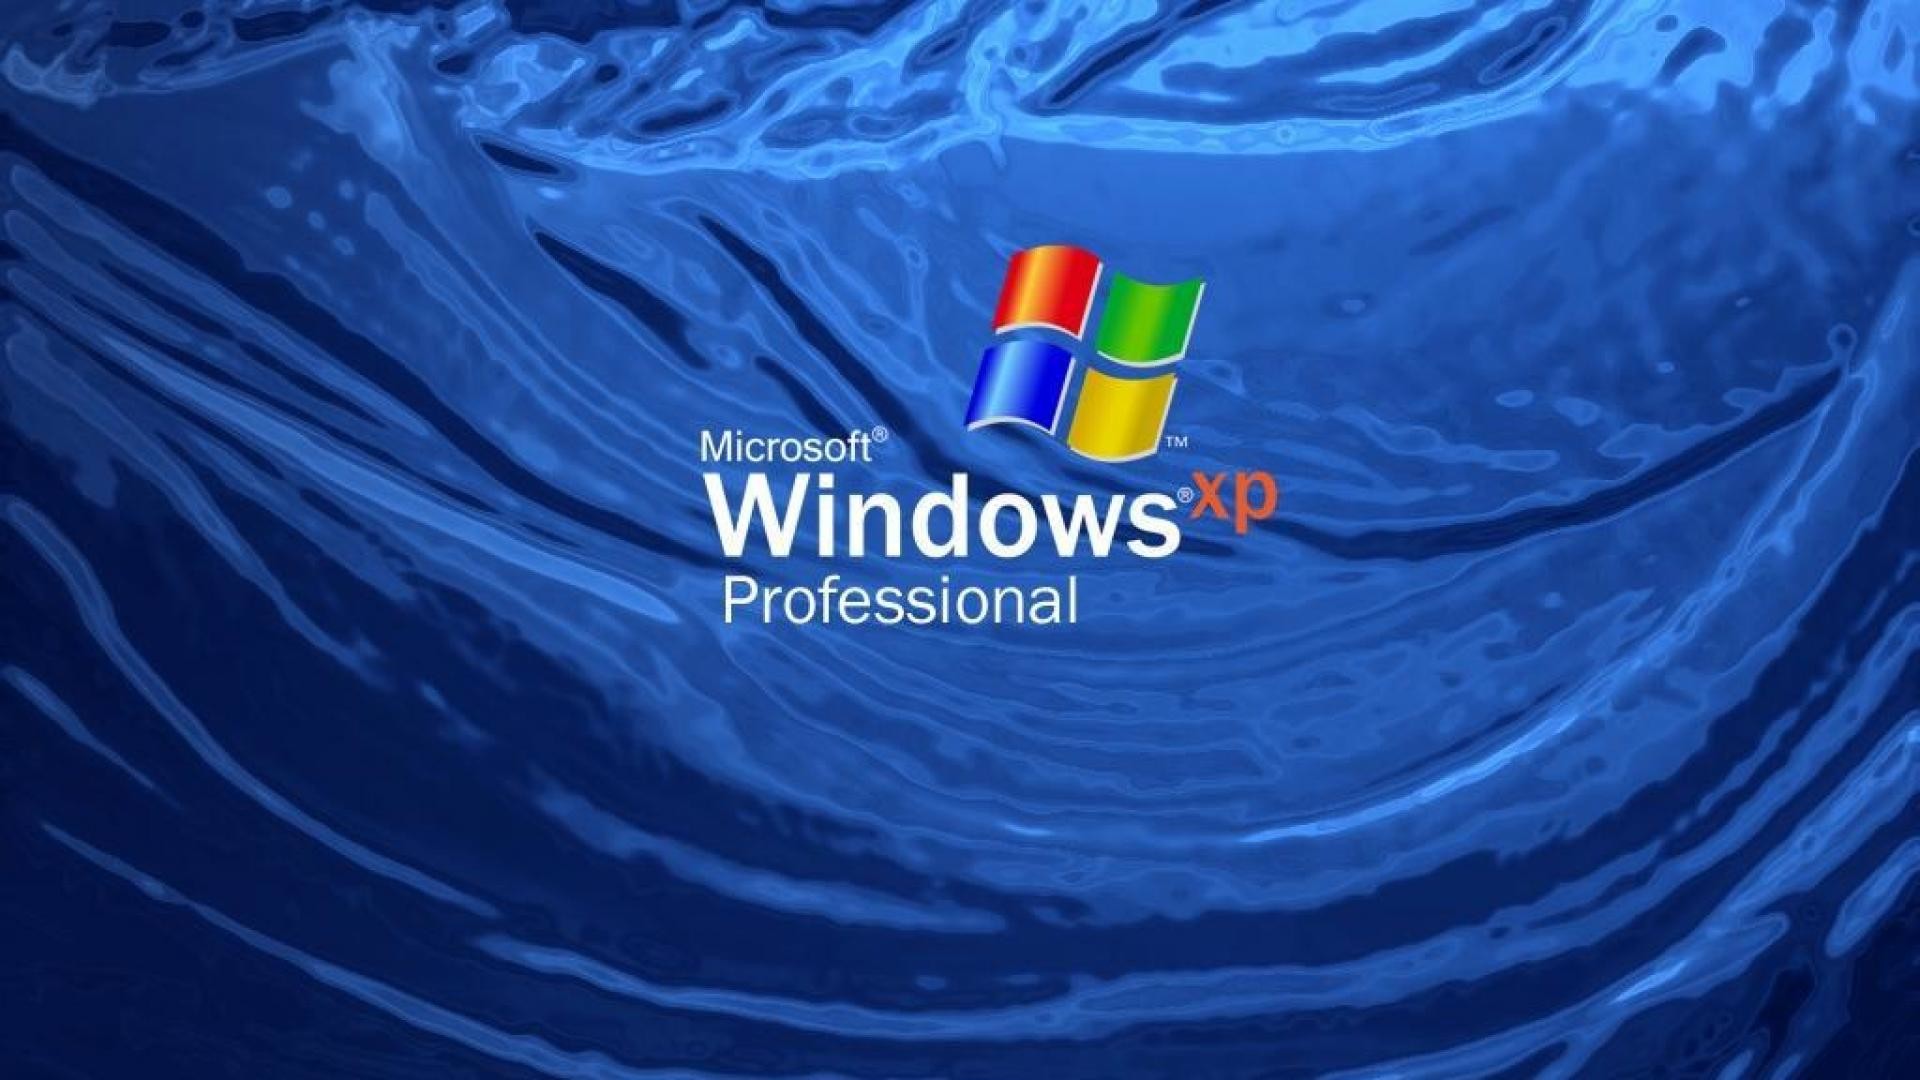 windows xp professional background